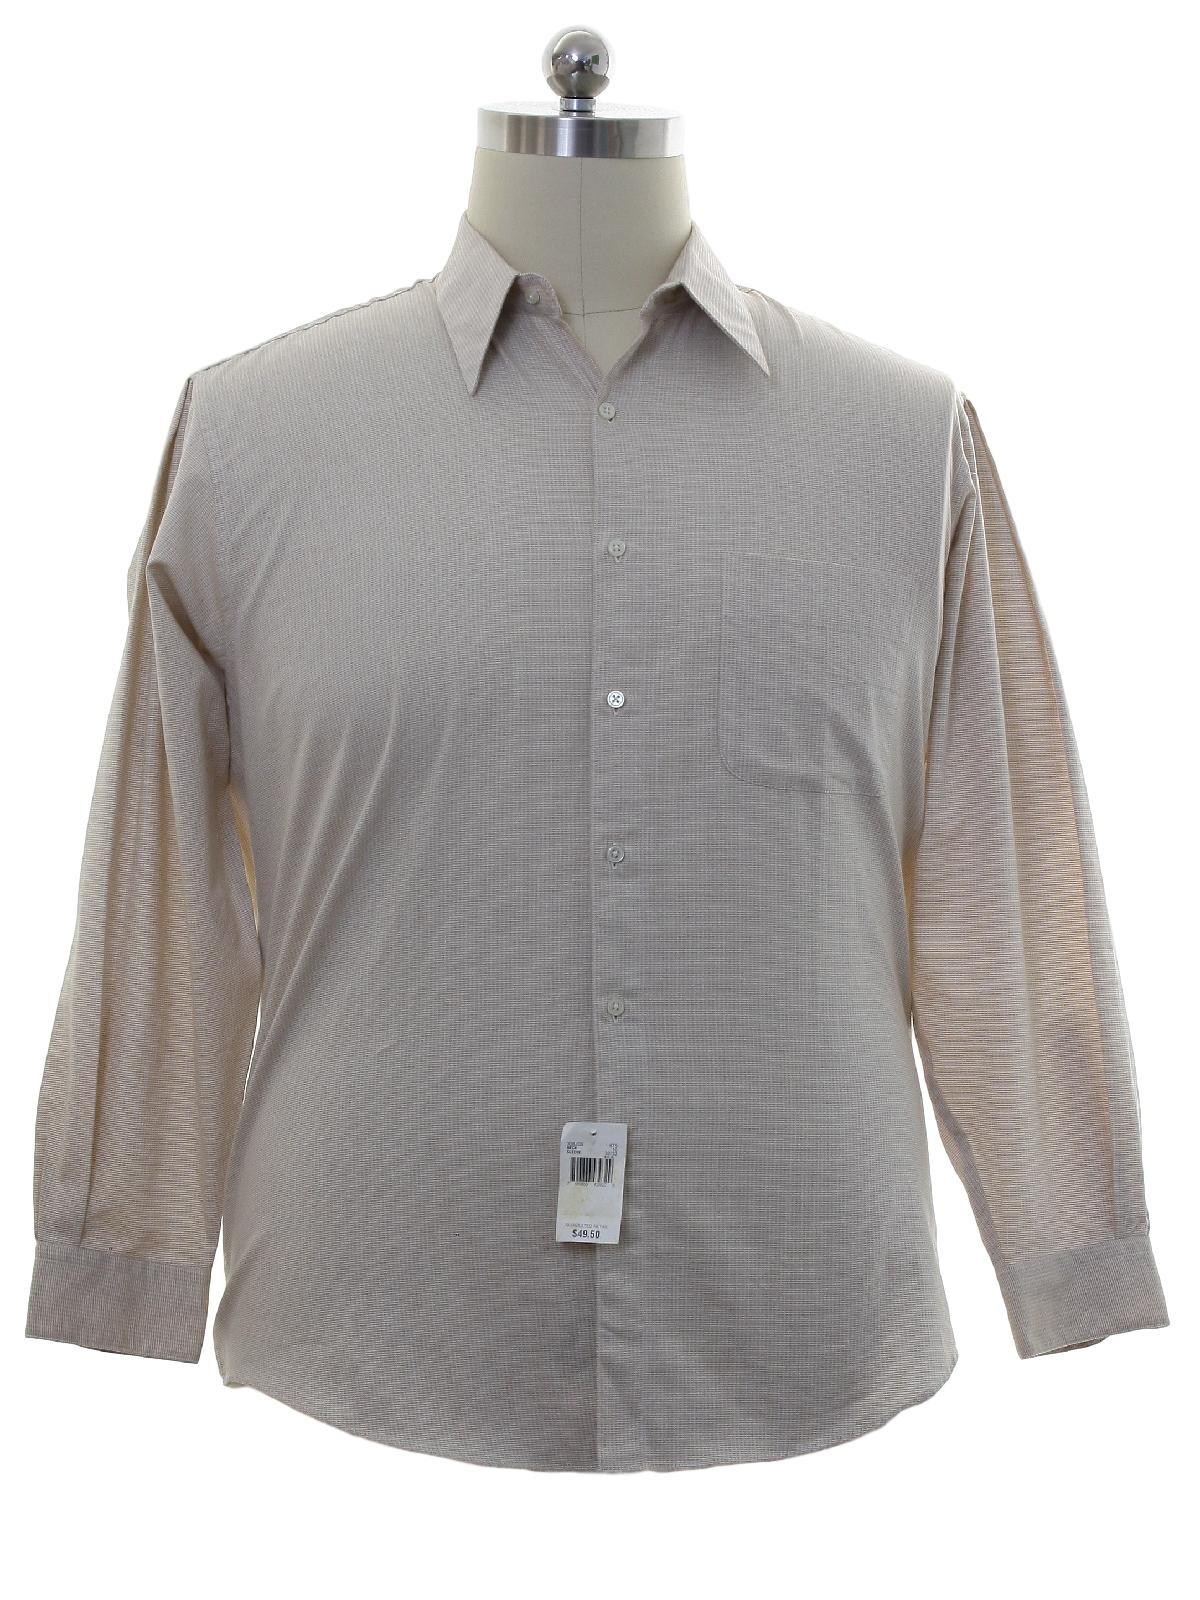 1990's Vintage Perry Ellis Shirt: 90s -Perry Ellis- Mens tan and white ...